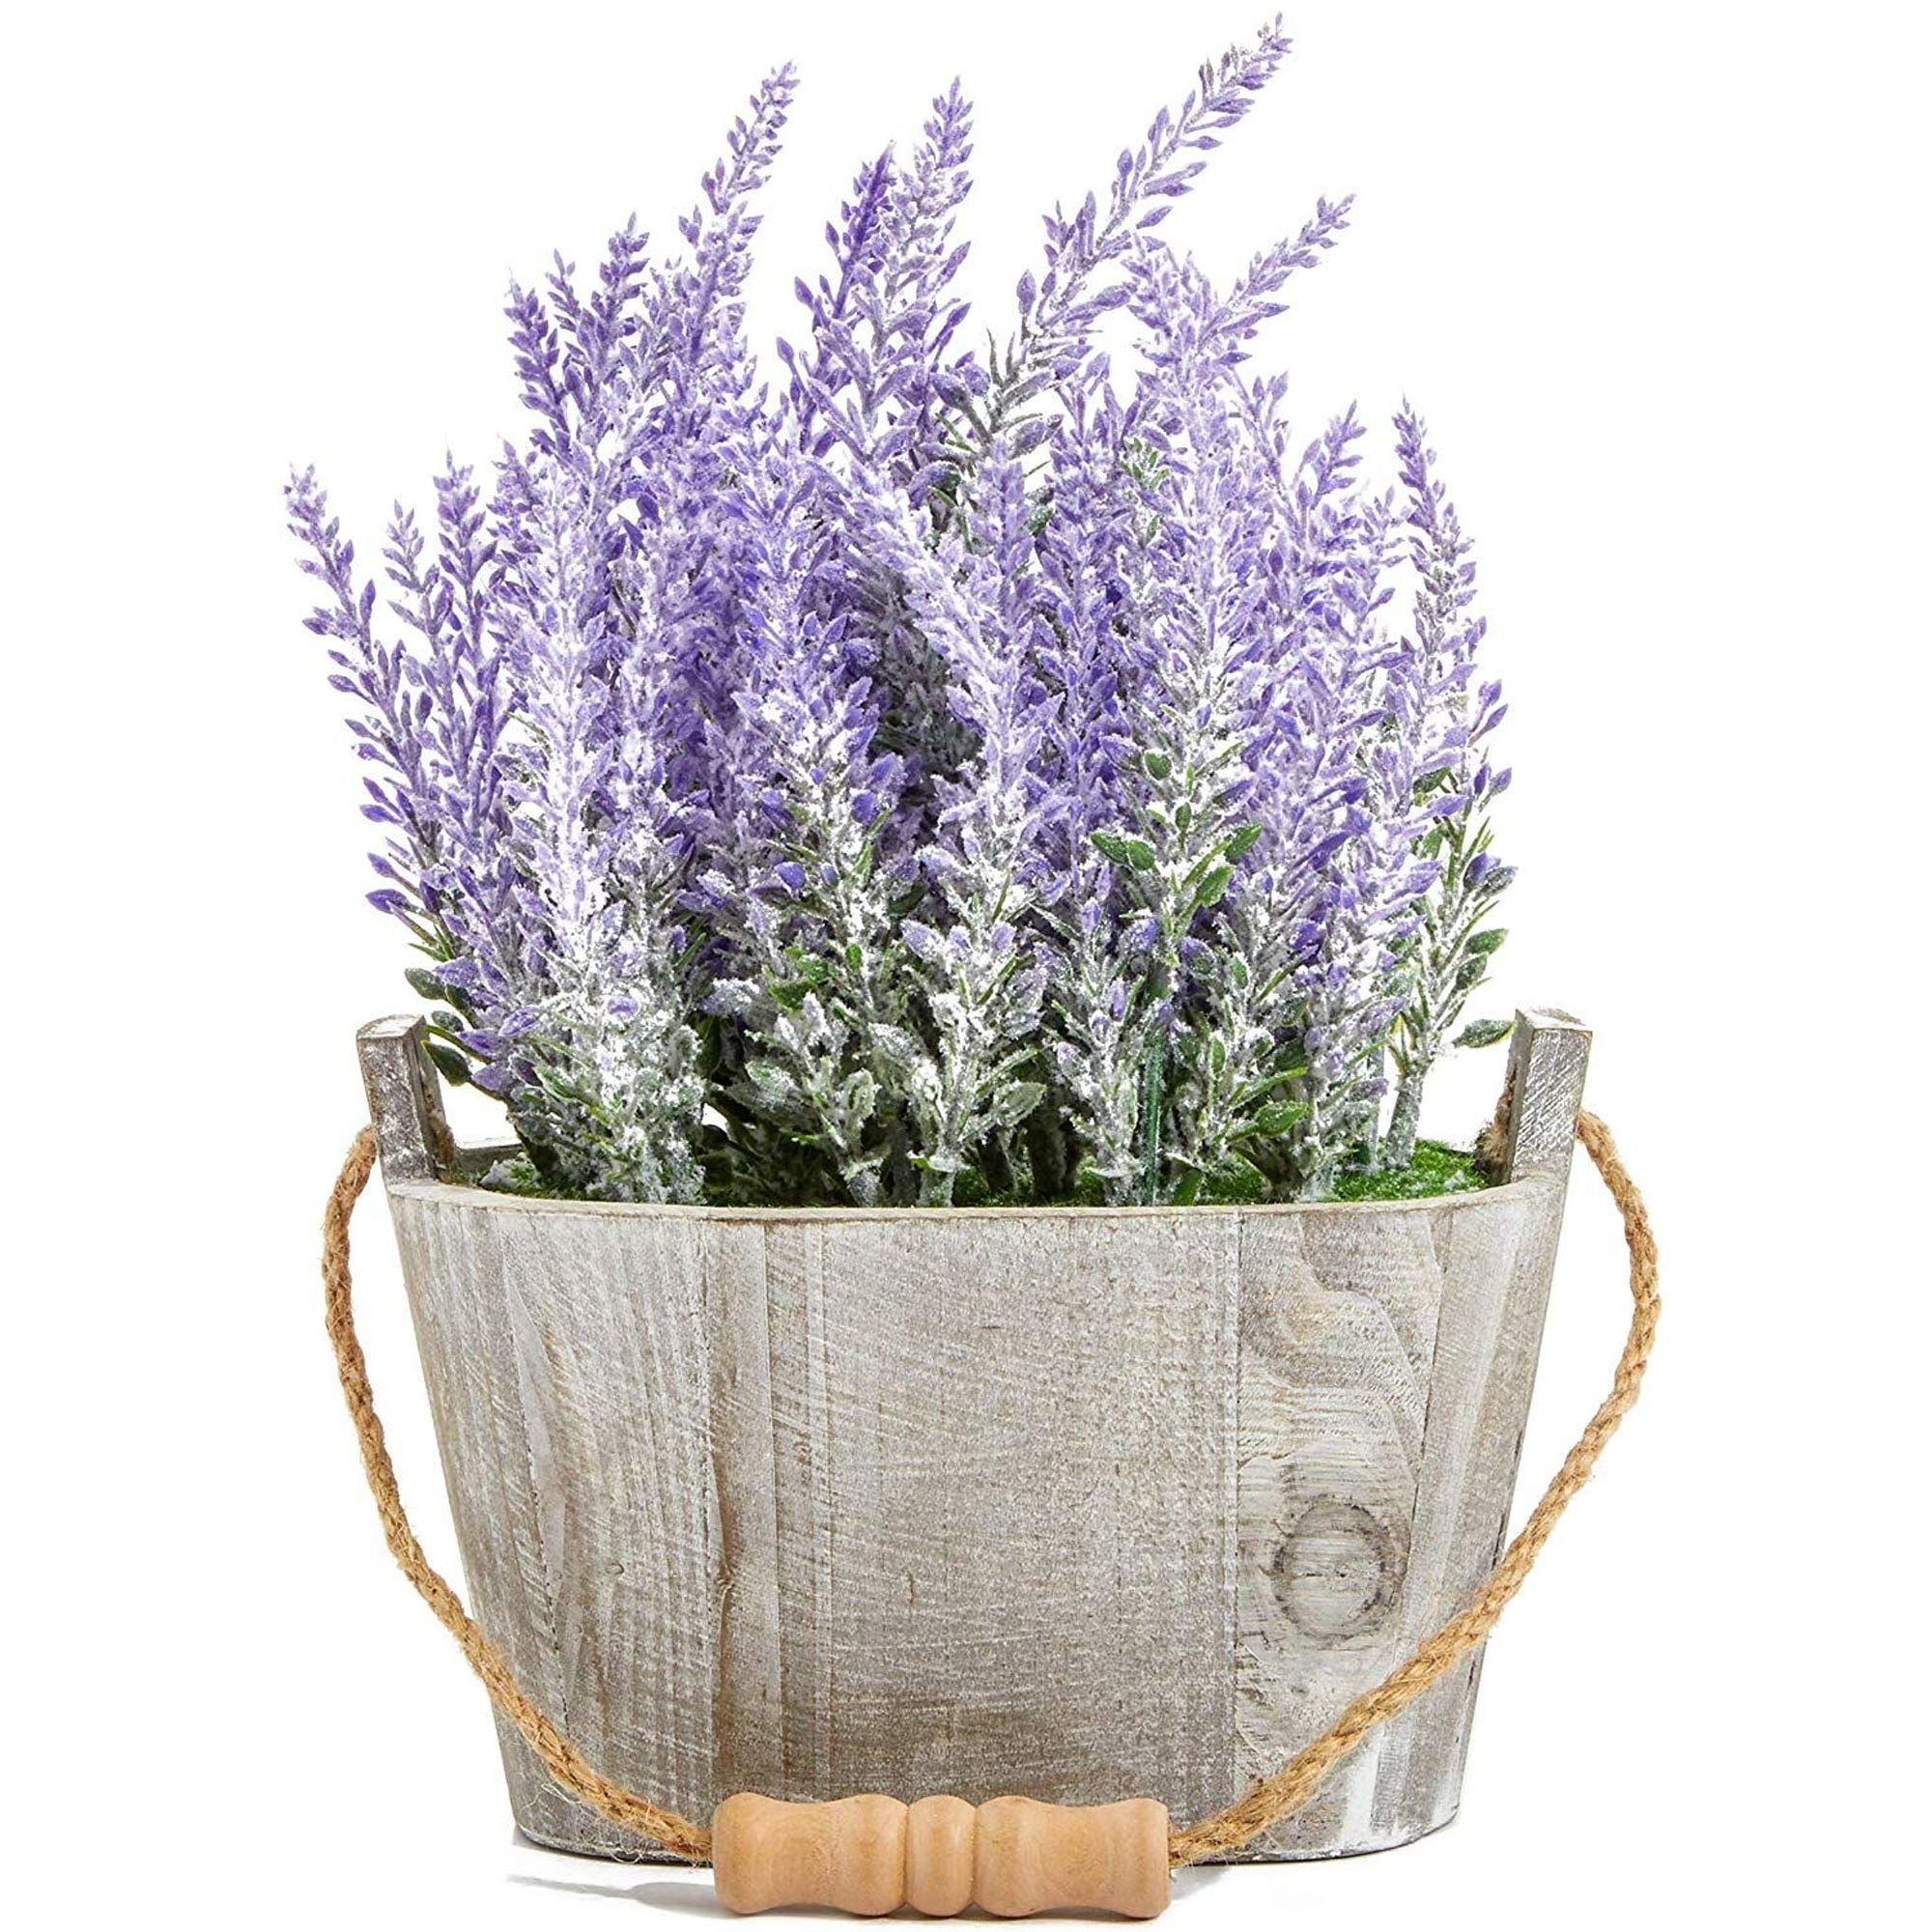 Wooden Pot Artificial Mini Potted Flowers Plant Lavender for Home Decor Party Wedding Garden Office Patio Decoration 